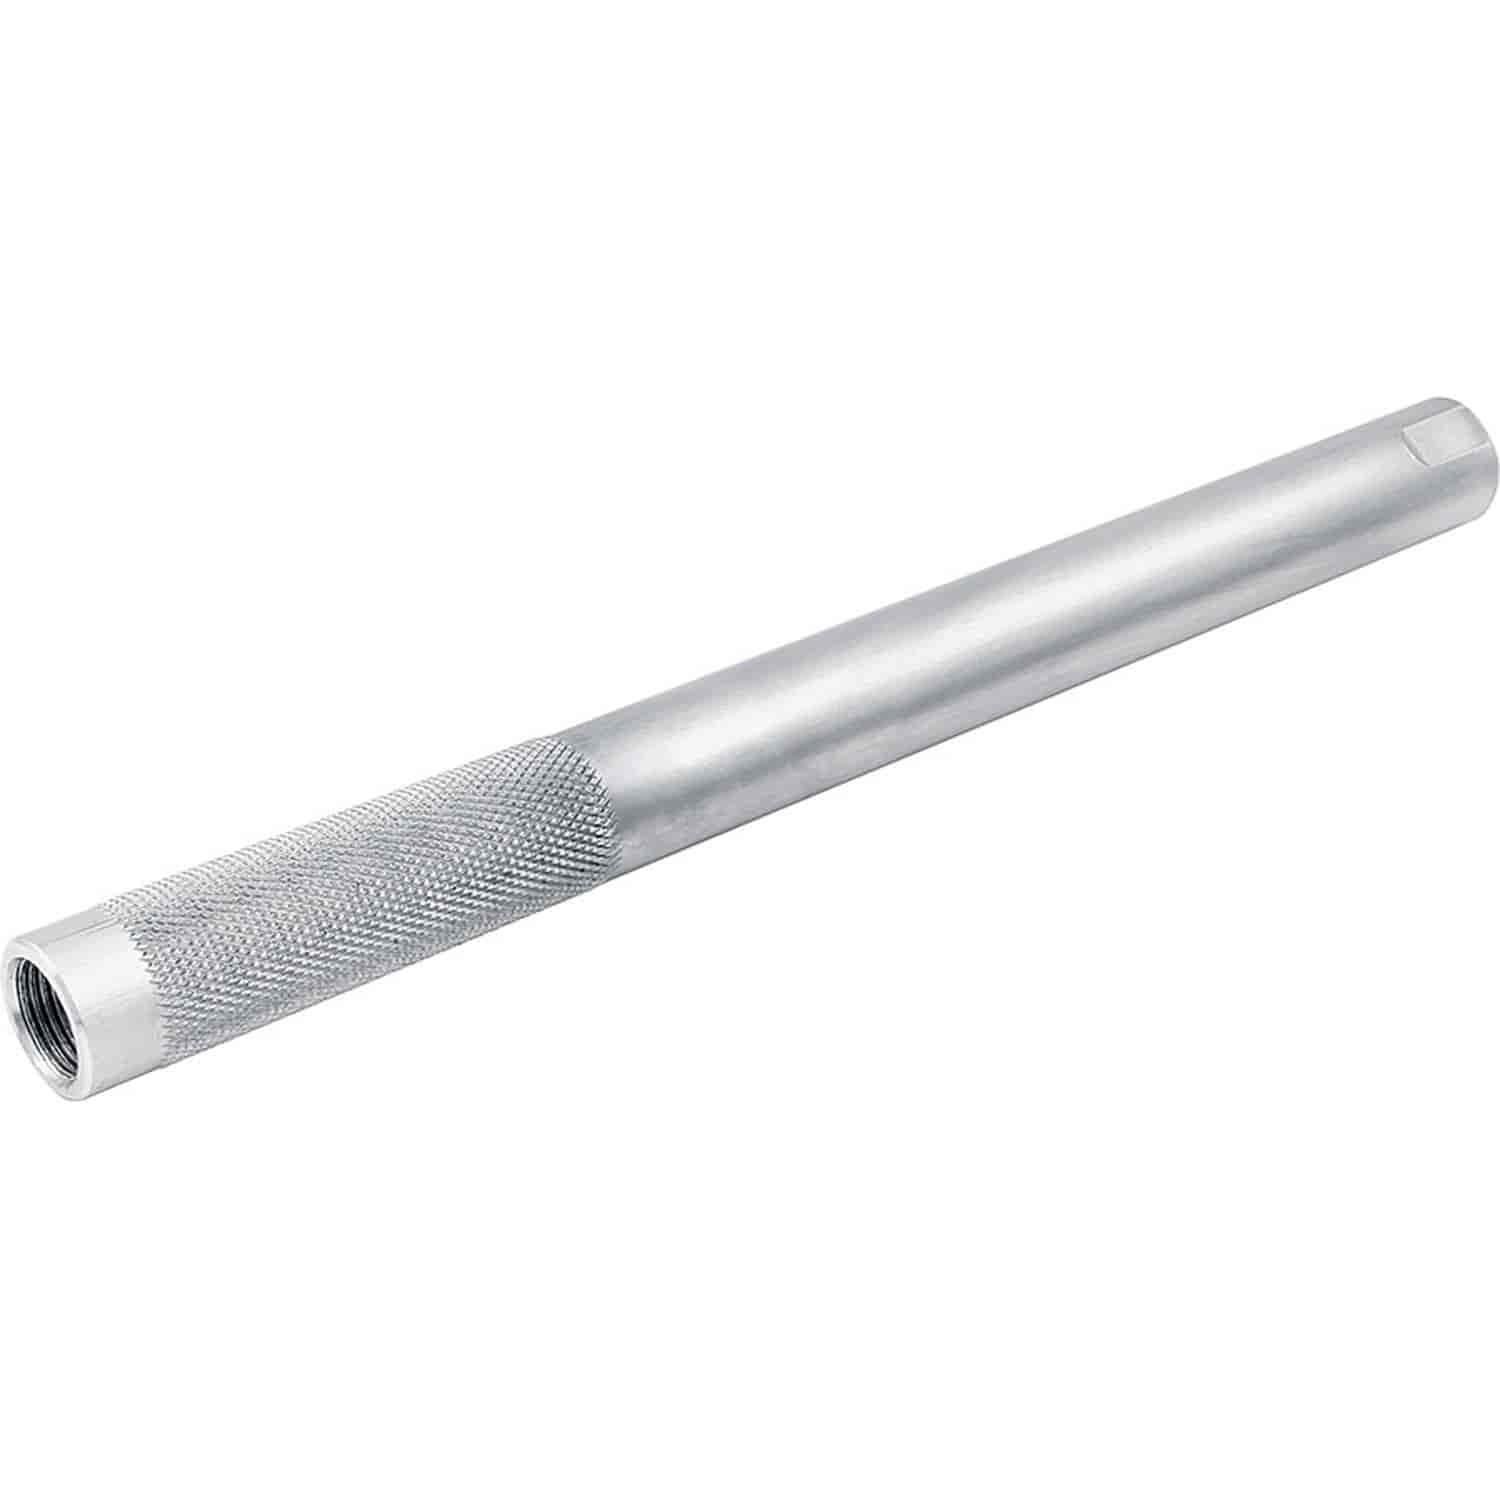 Swedged Aluminum Tie Rod Tube Length: 9"